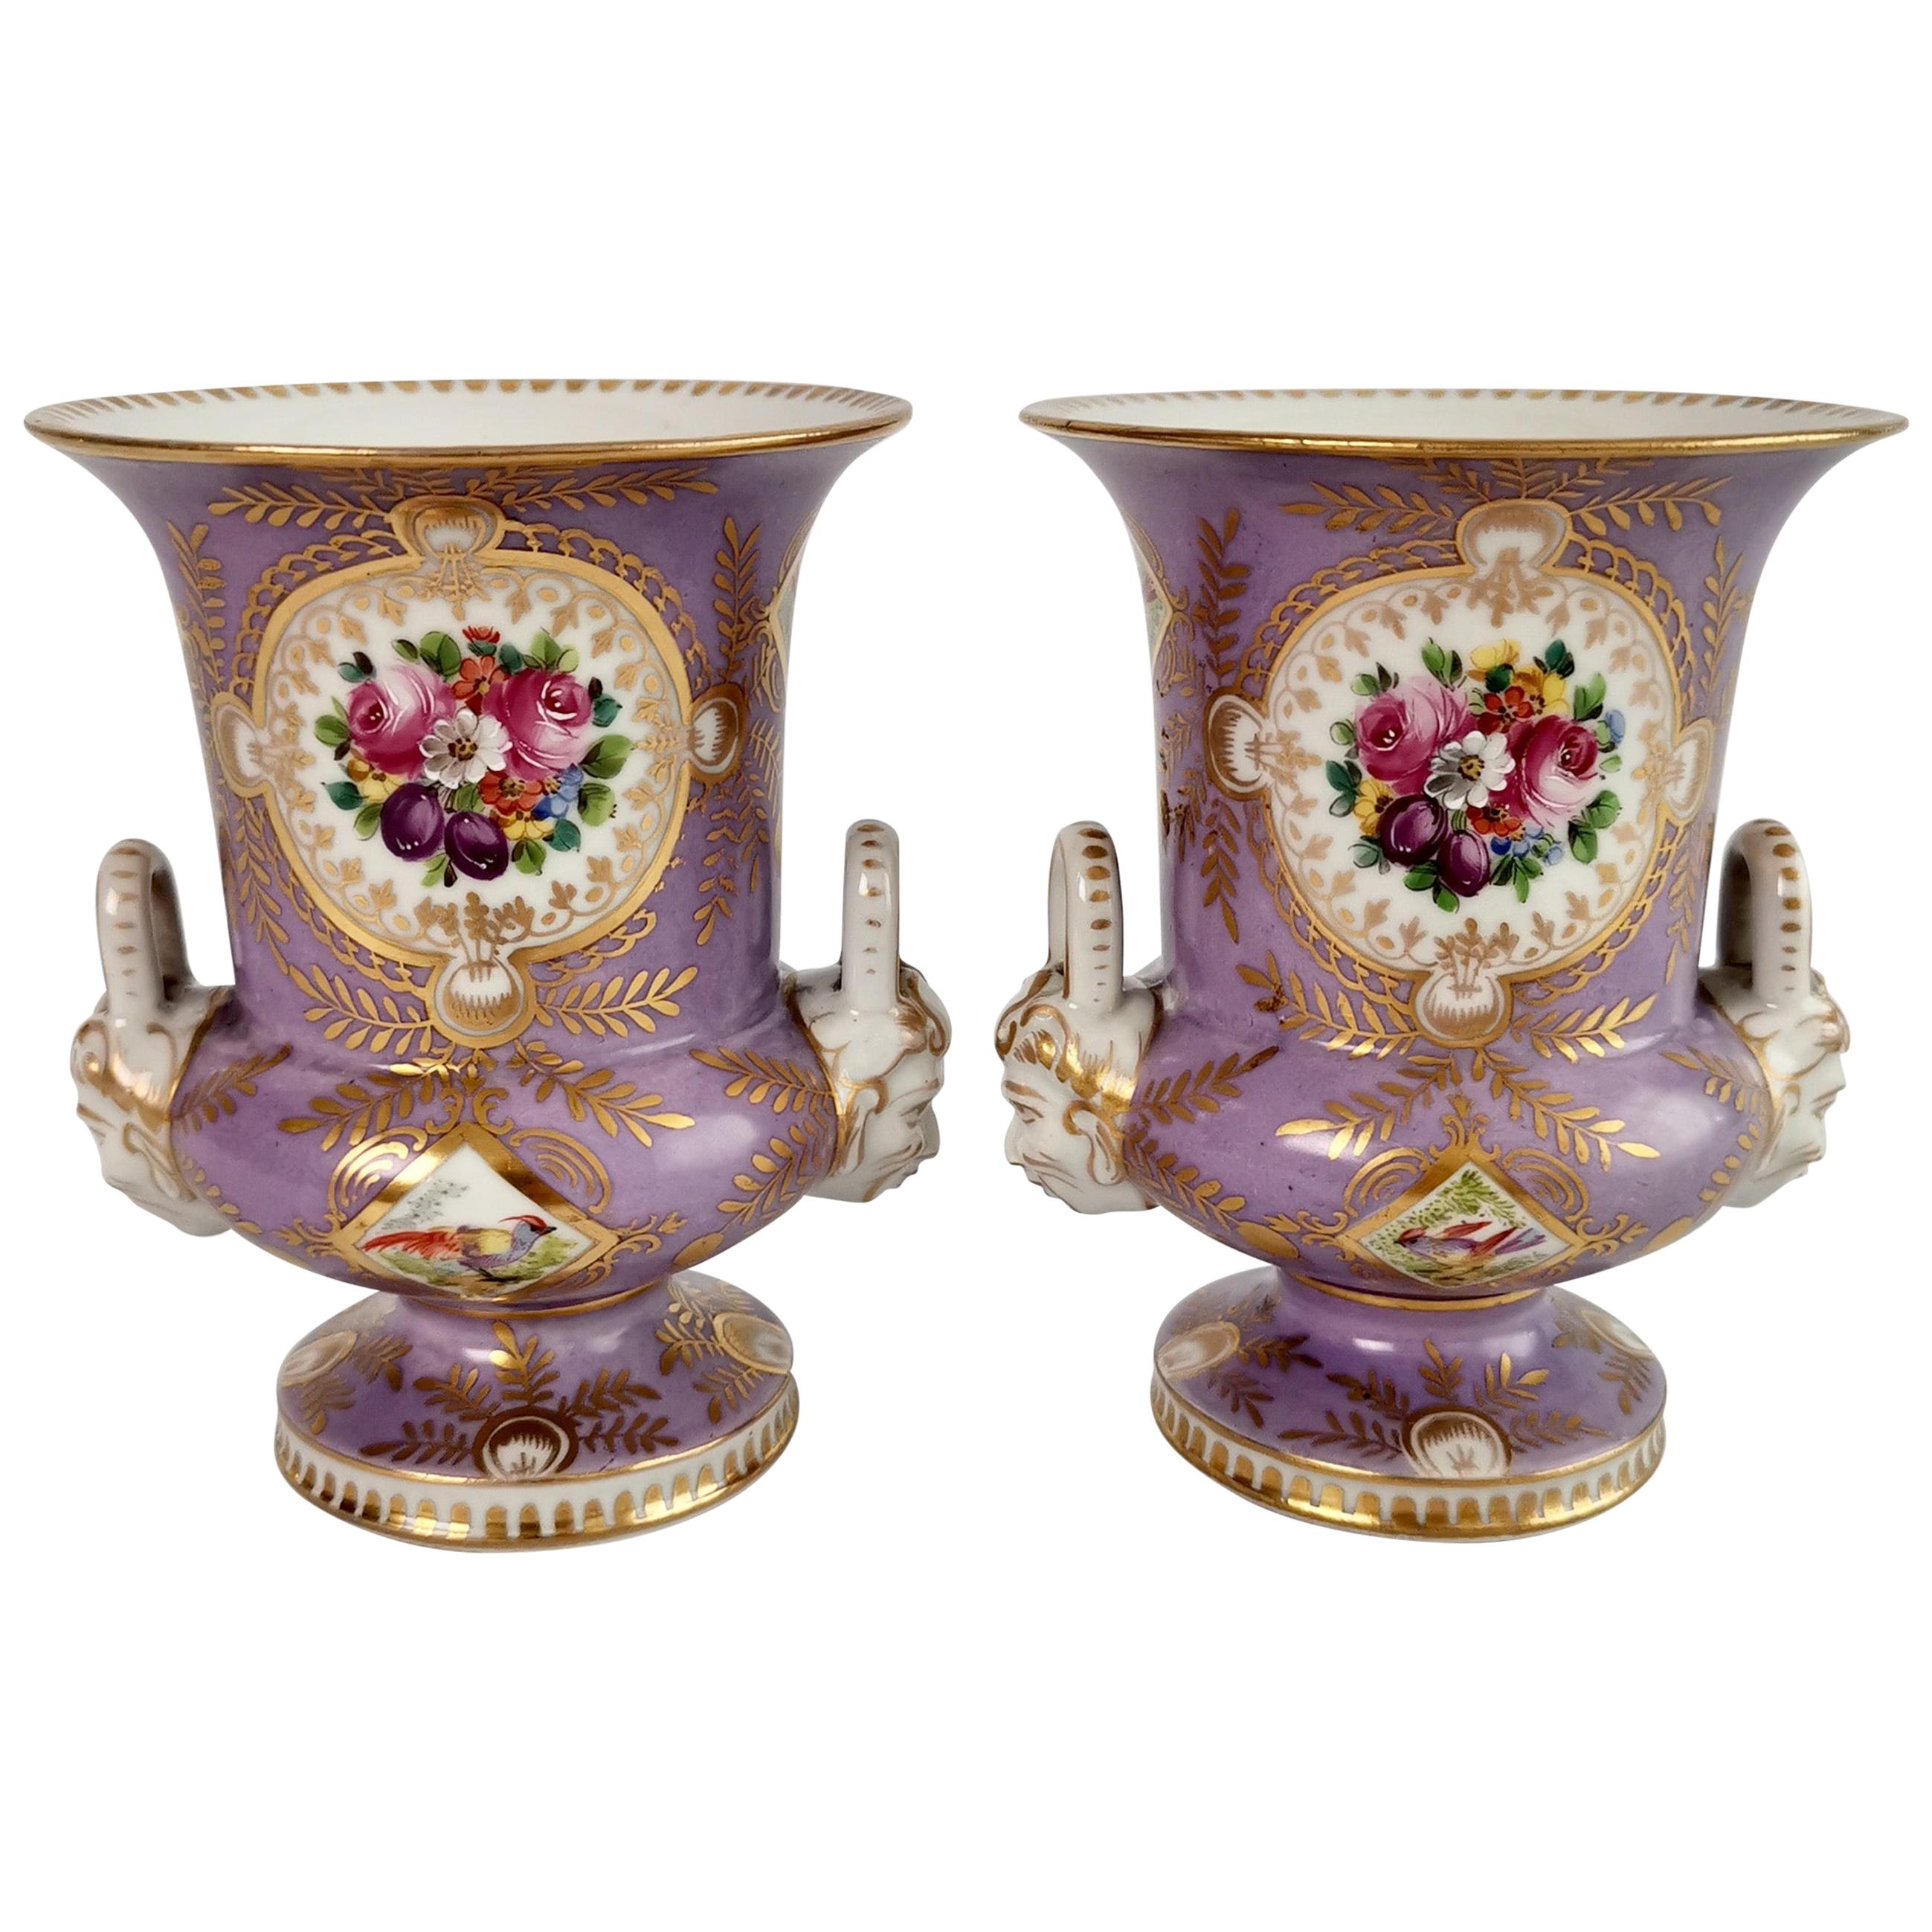 Two Porcelain Campana Vases Attr. to Edmé Samson, Lilac, Birds, Flowers, 19th C